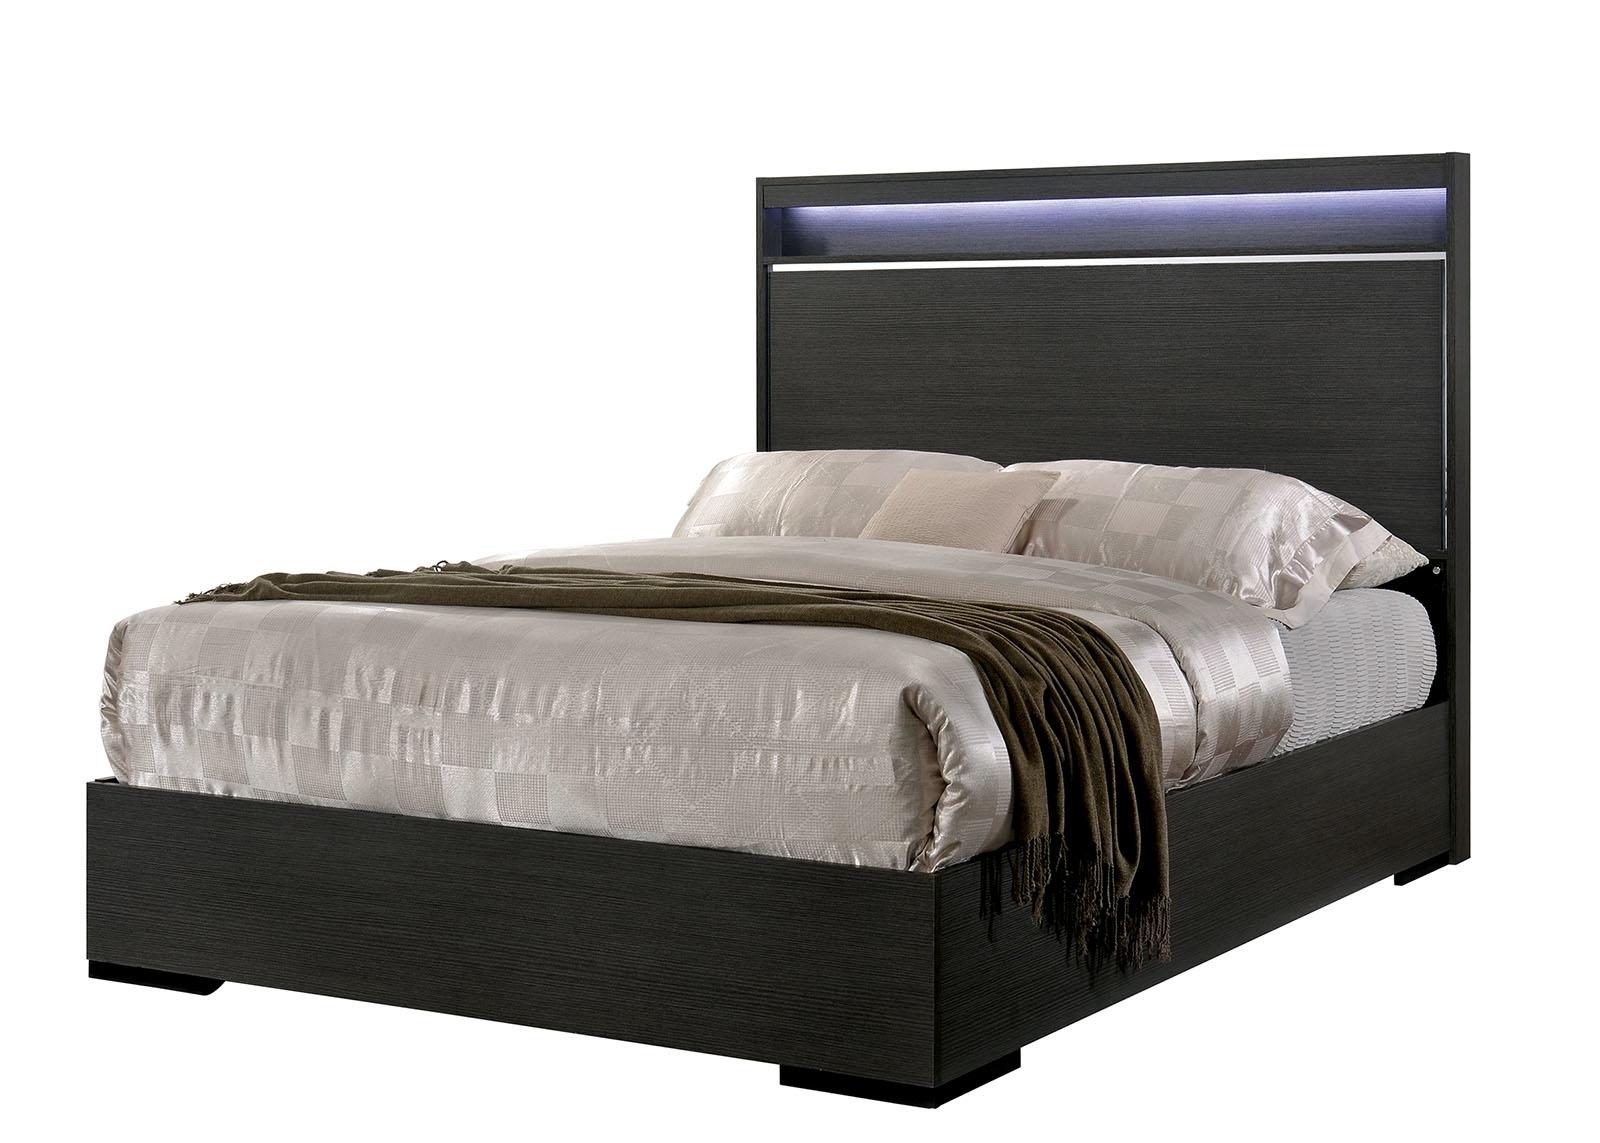 Contemporary Platform Bed CM7589-Q Camryn CM7589-Q in Warm Gray 